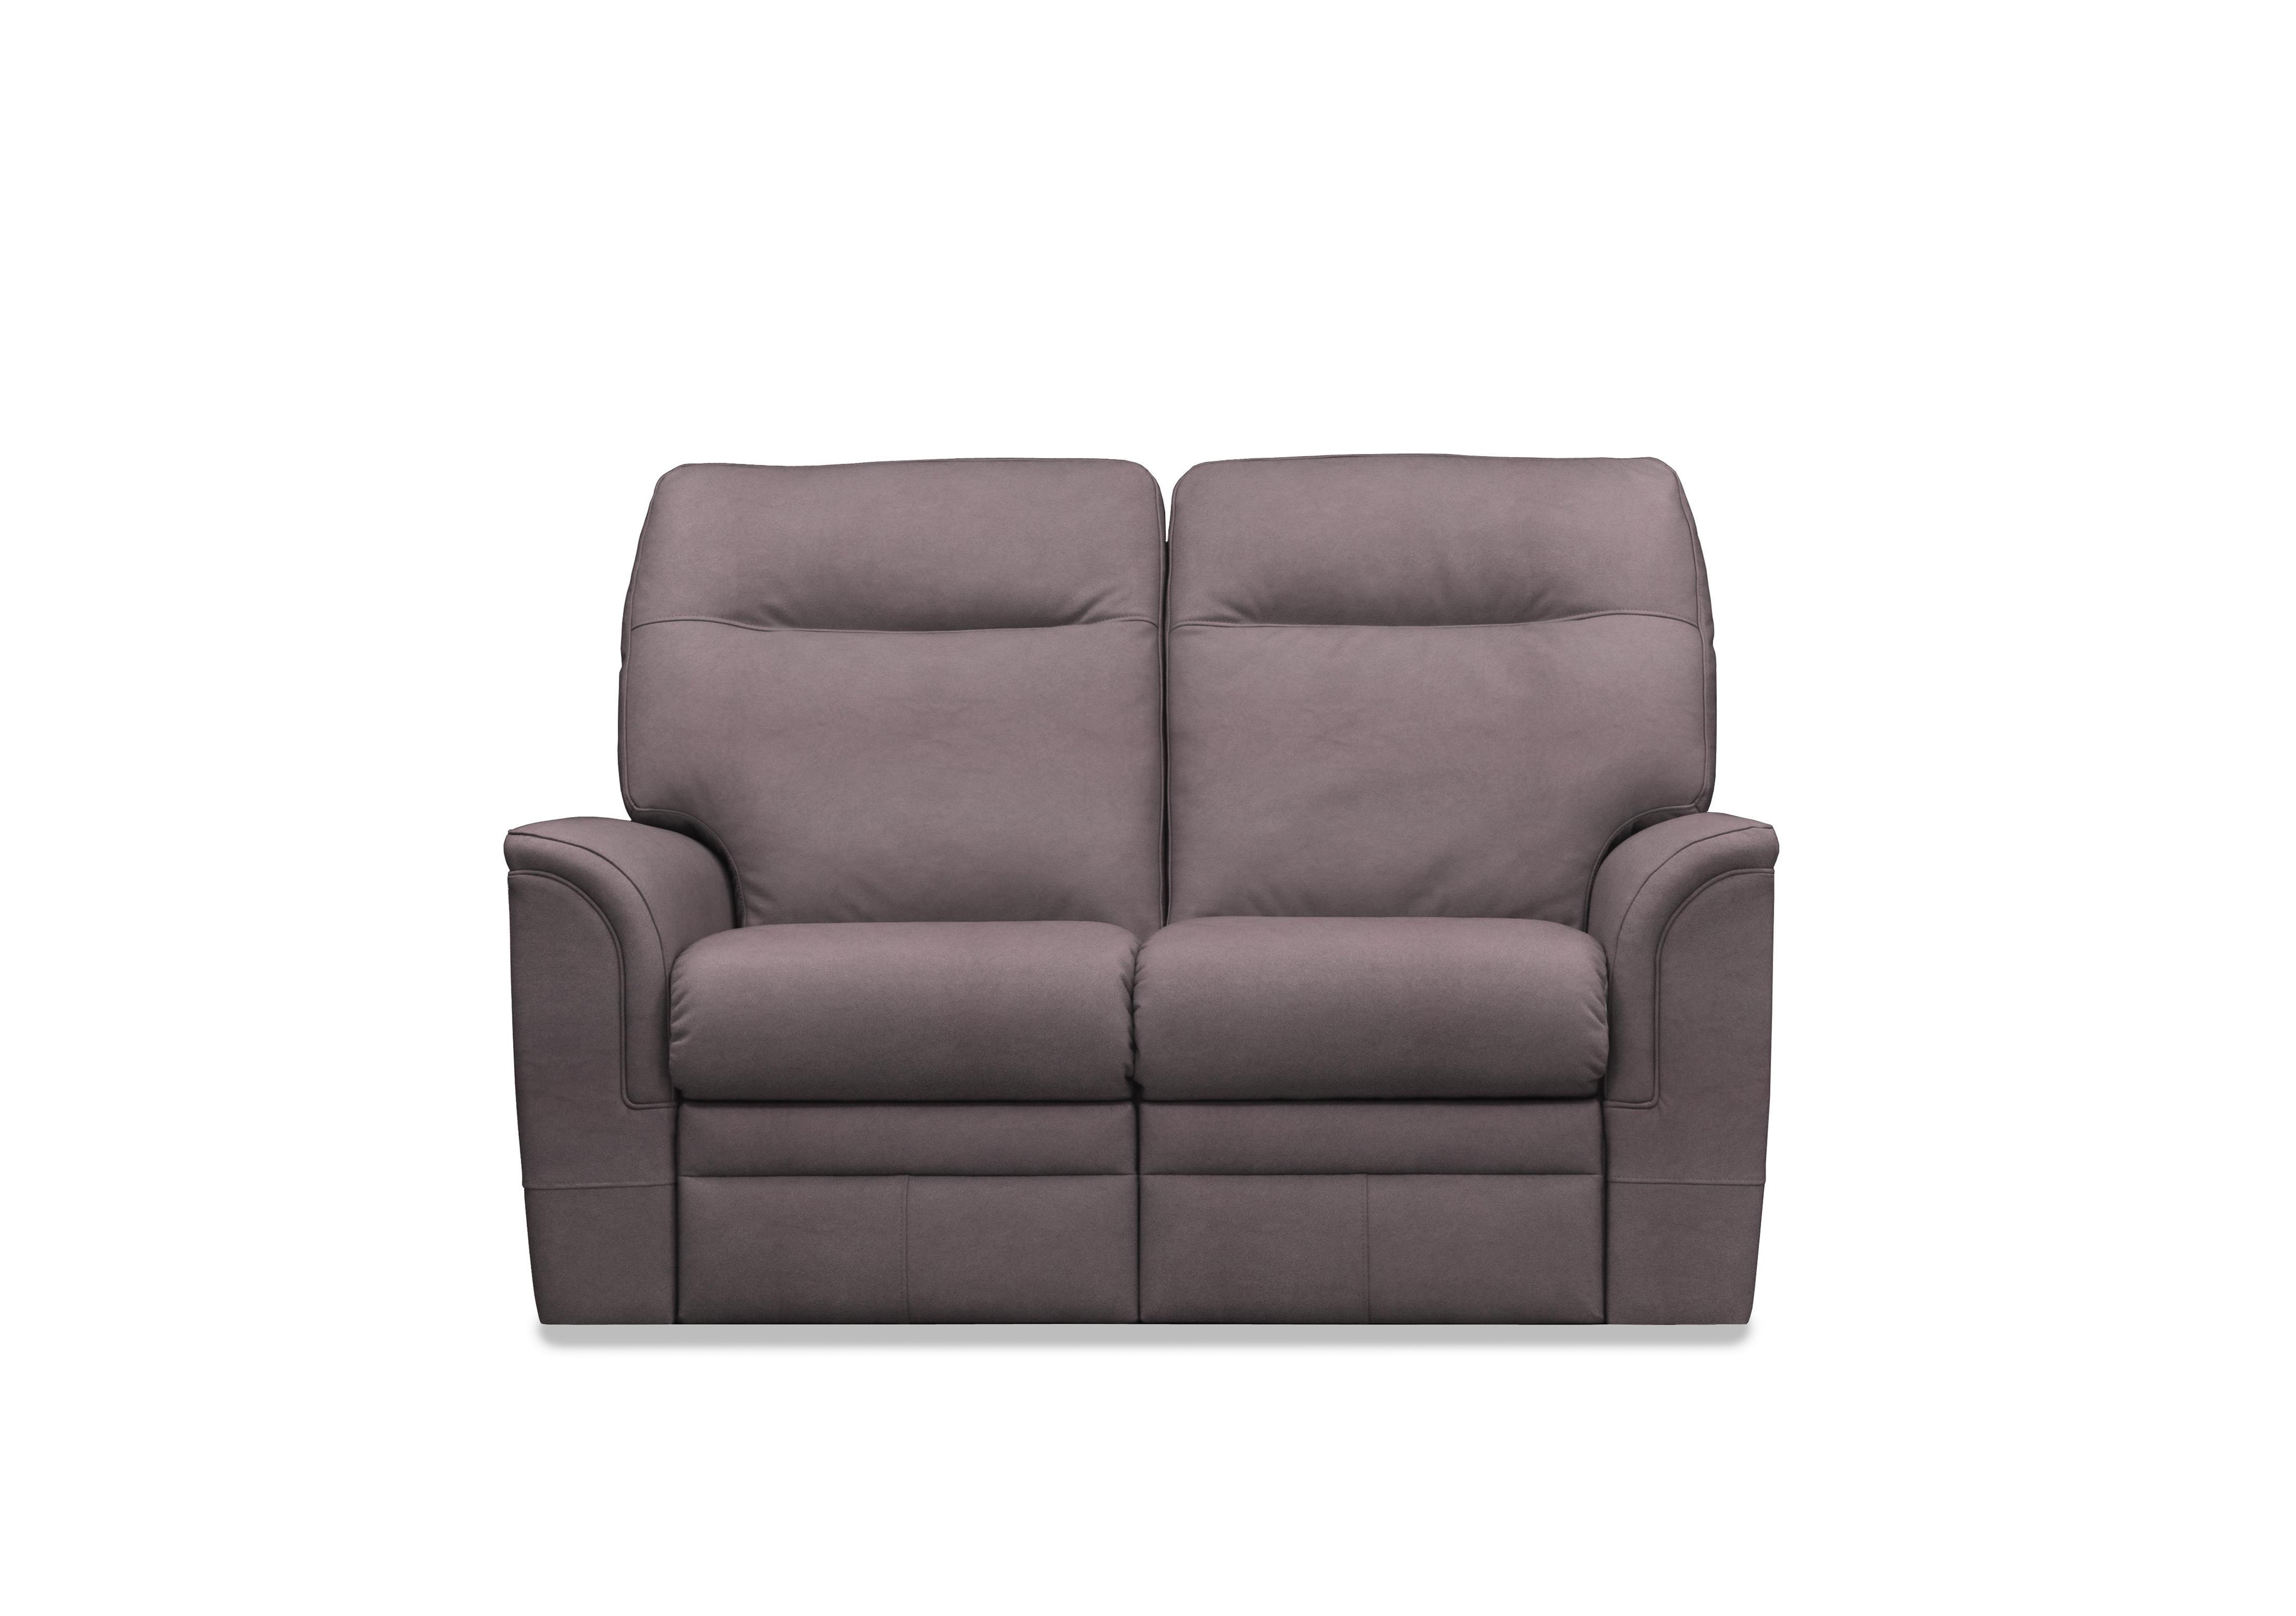 Hudson 23 Leather 2 Seater Sofa in Revolution Truffle 009027-0029 on Furniture Village